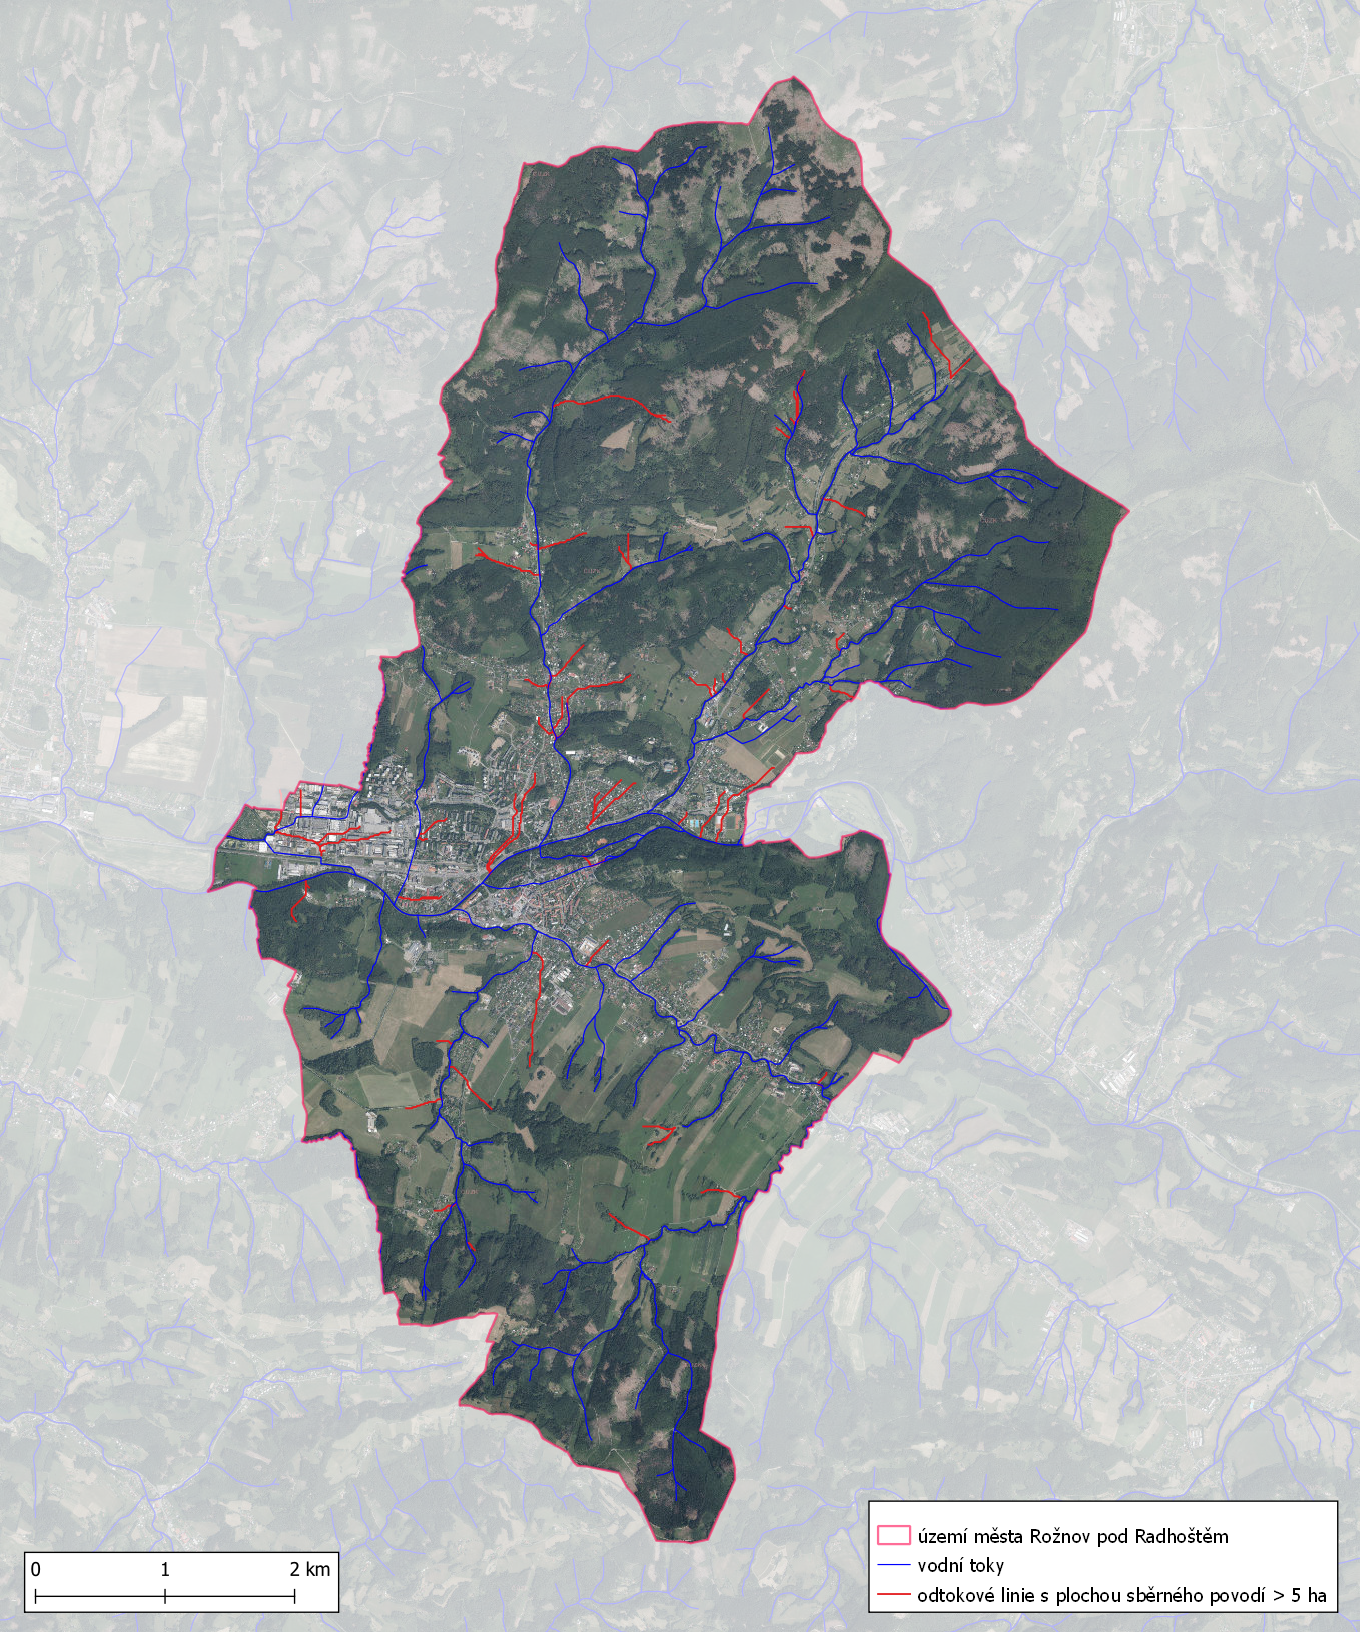 Odtokové linie na území města Rožnov pod Radhoštěm